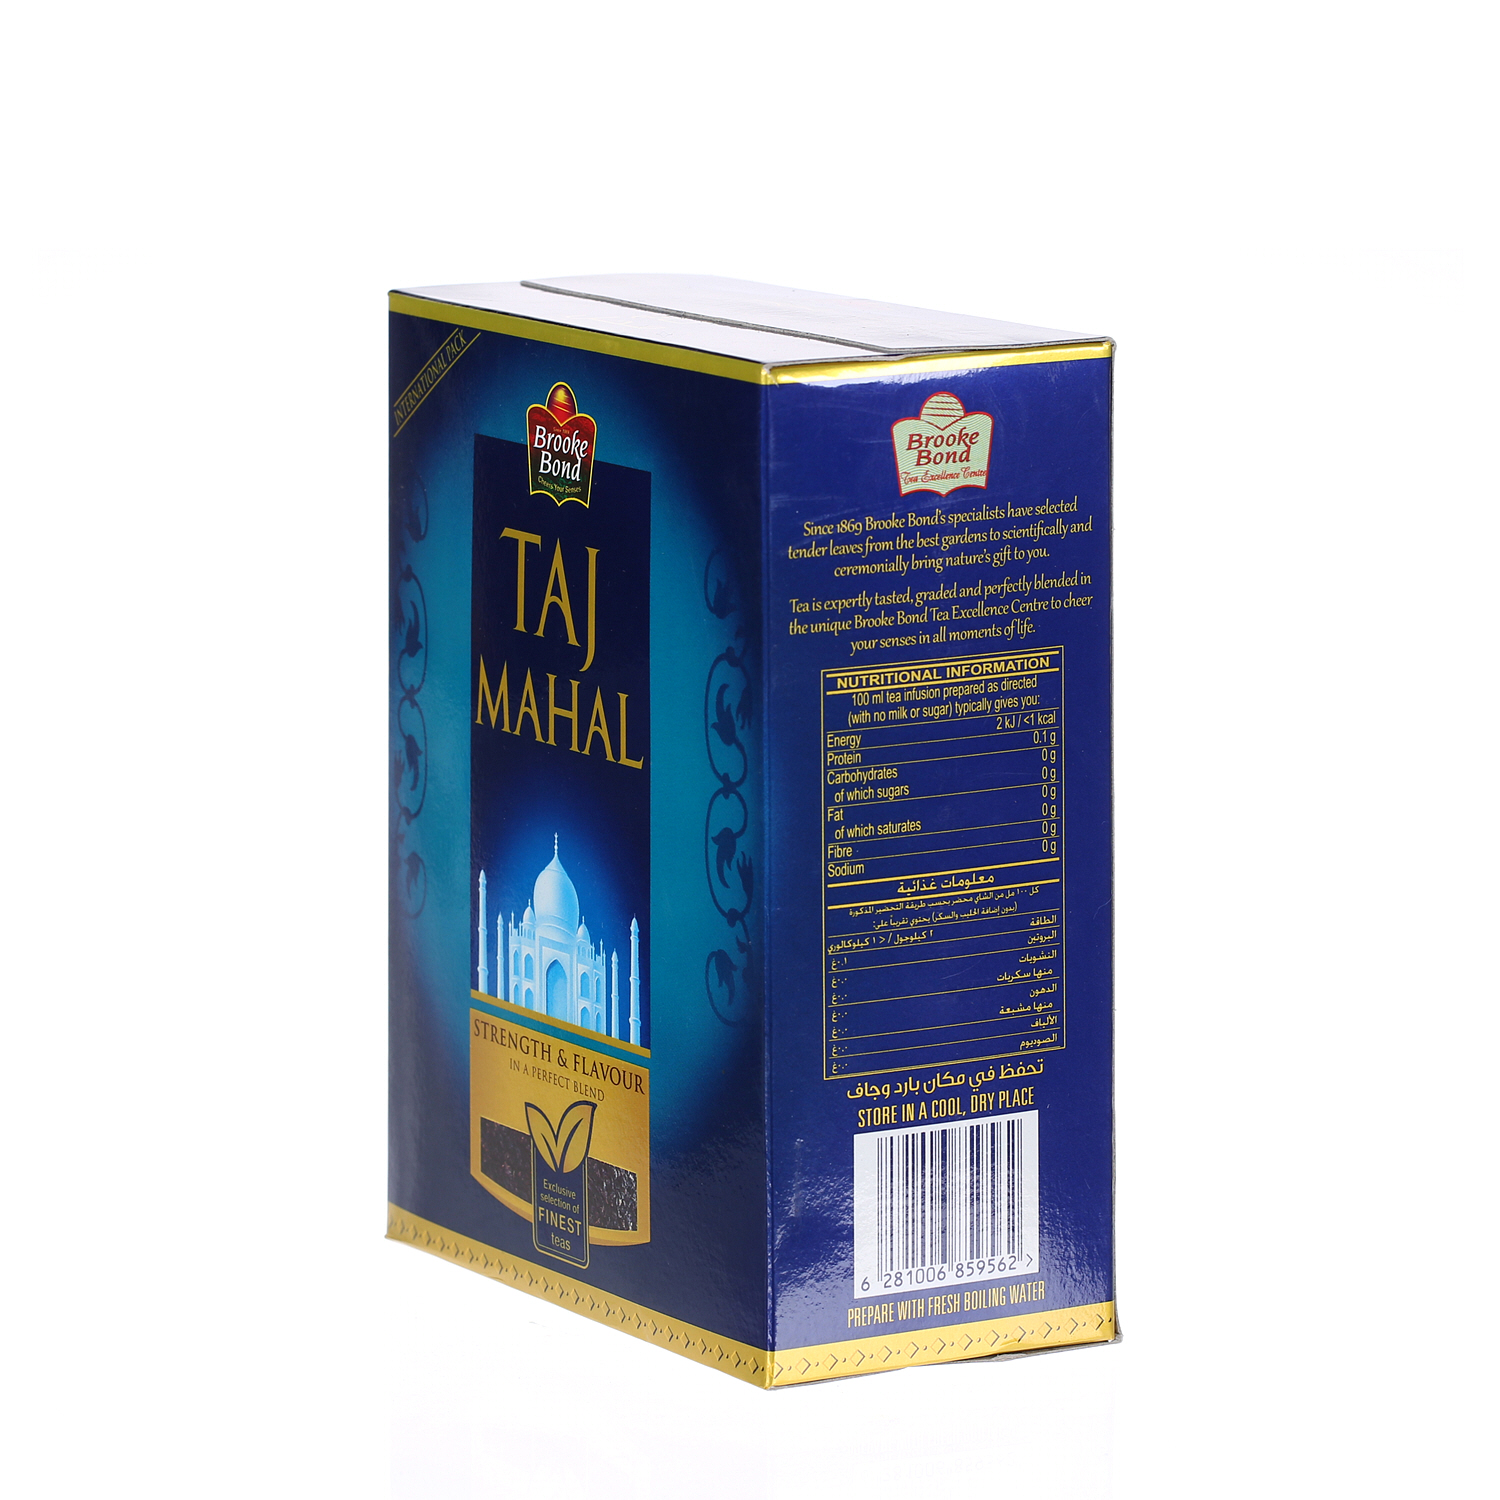 Brooke Bond Taj Mahal Tea Packet 400gm